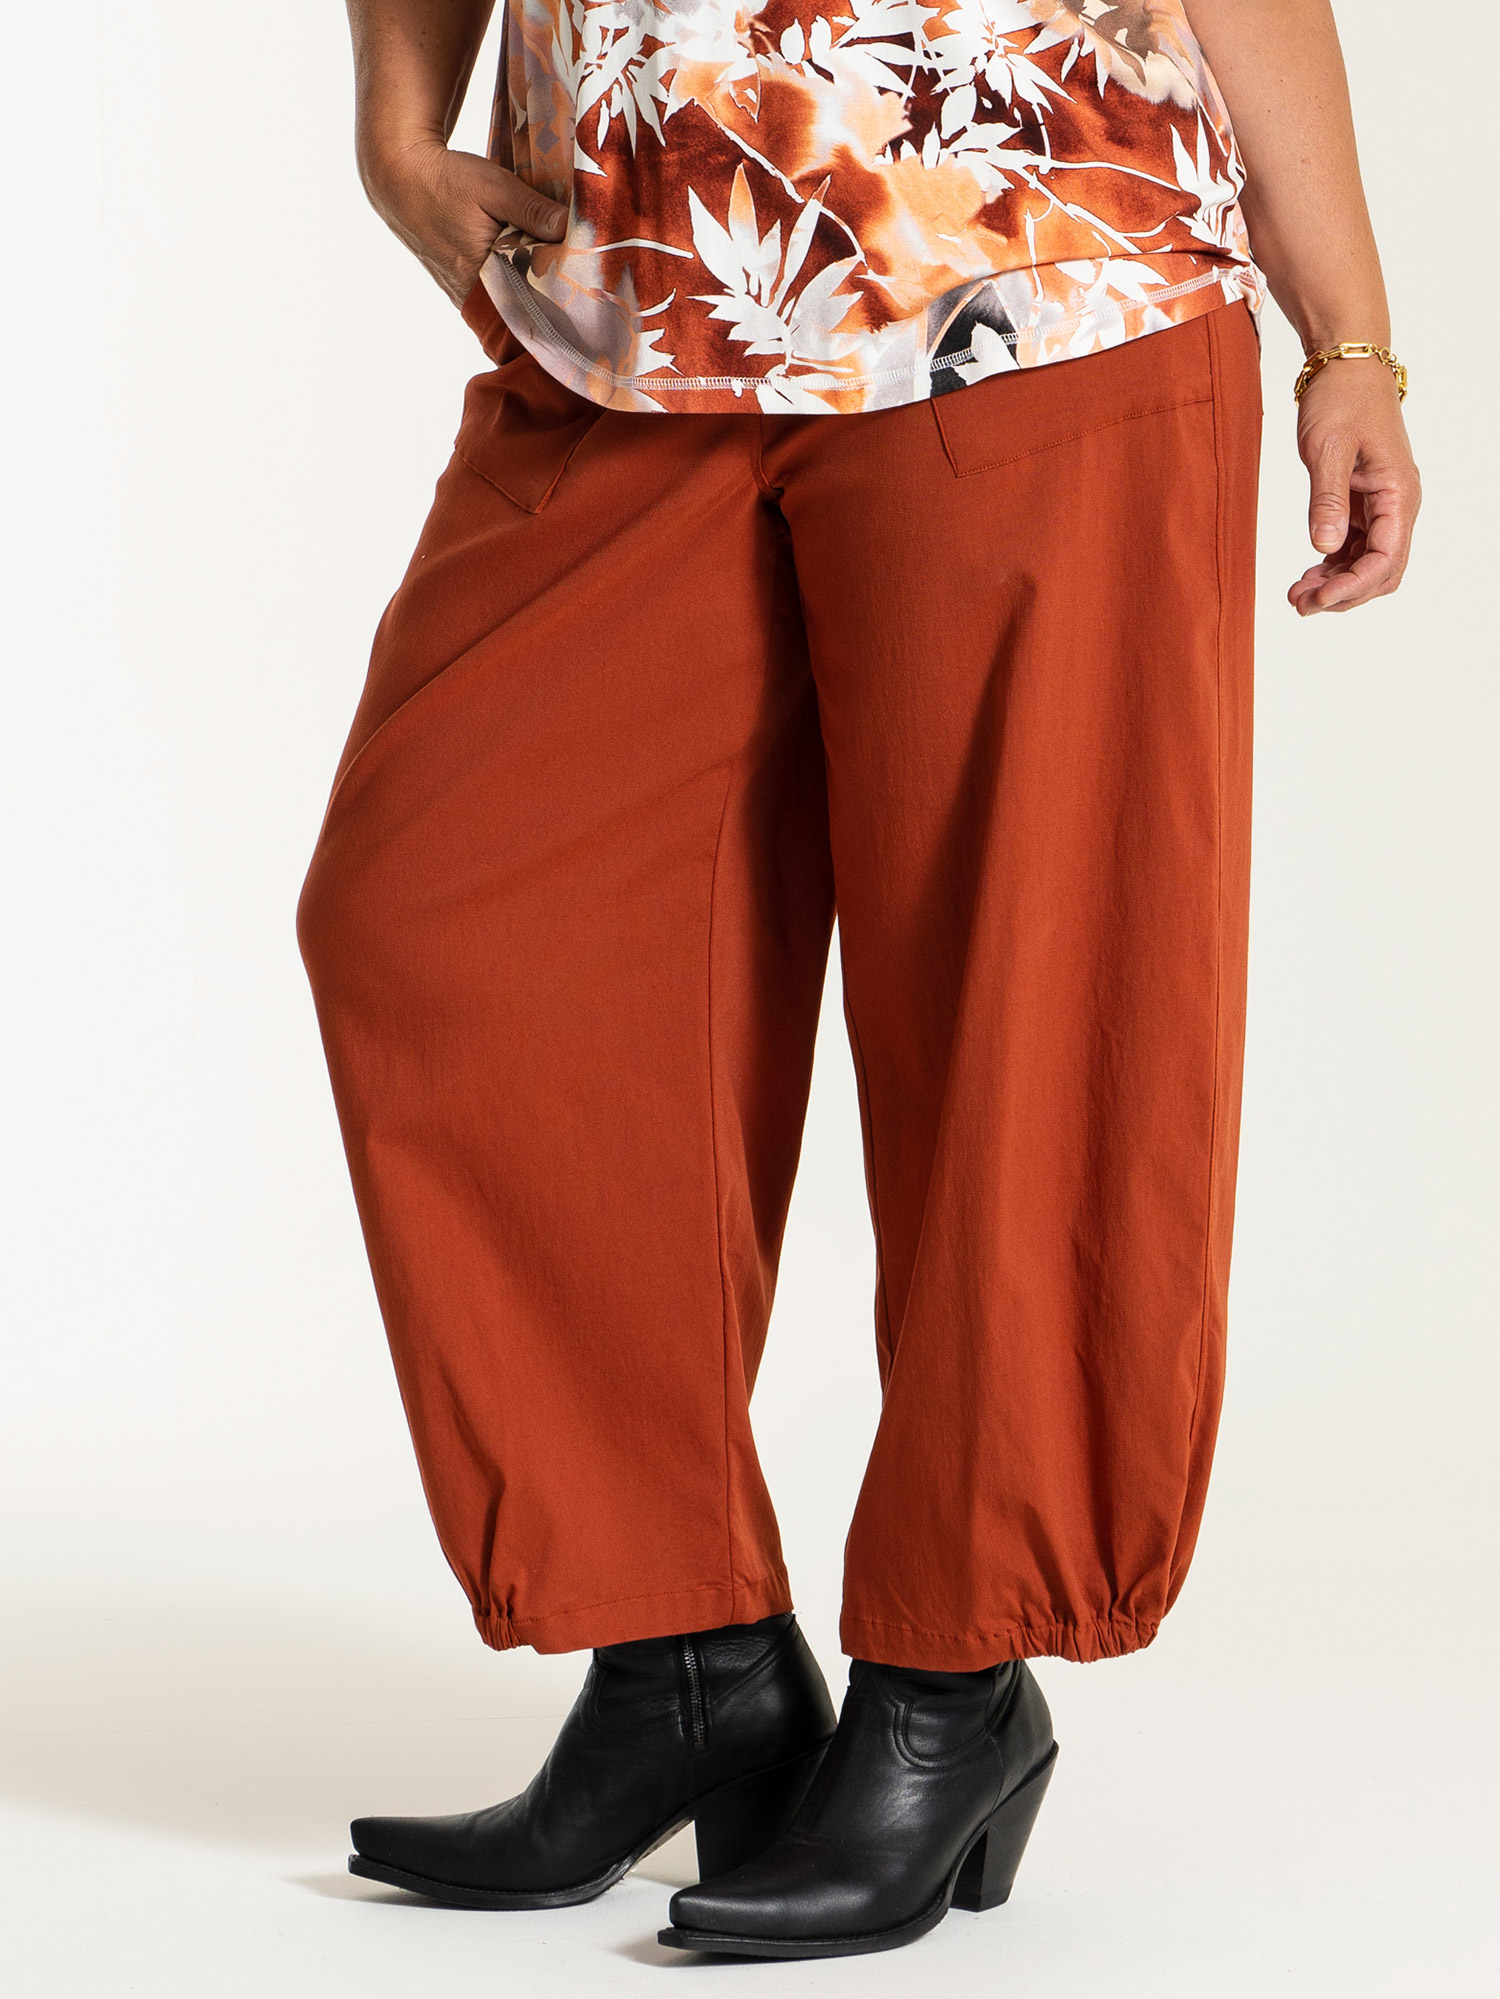 CLARA - Oransje culotte bukser fra Gozzip